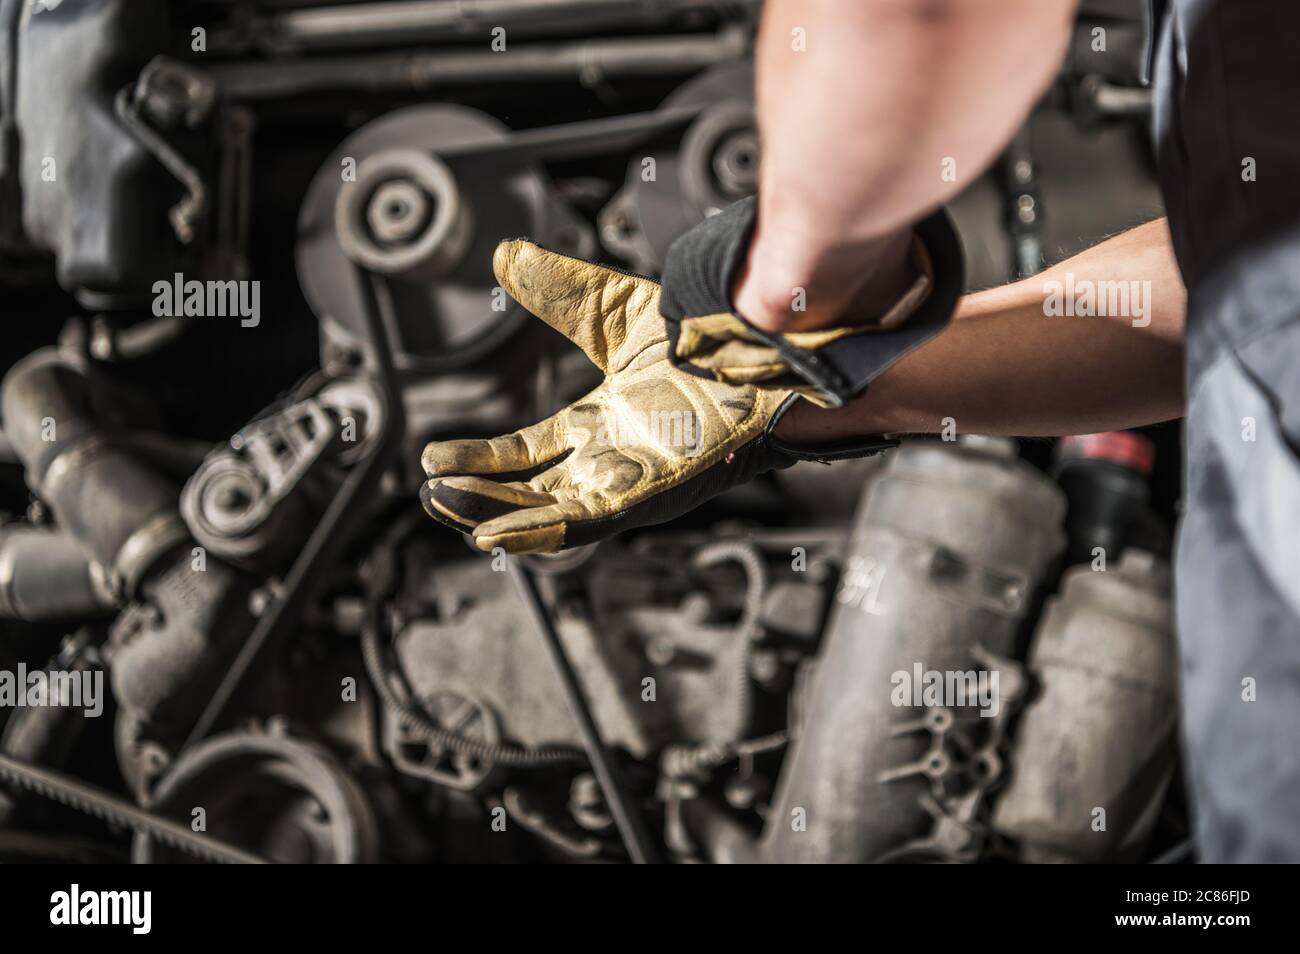 Caucasian Heavy Duty Diesel Engines Mechanic Preparing For Work Wearing Safety Gloves Stock Photo